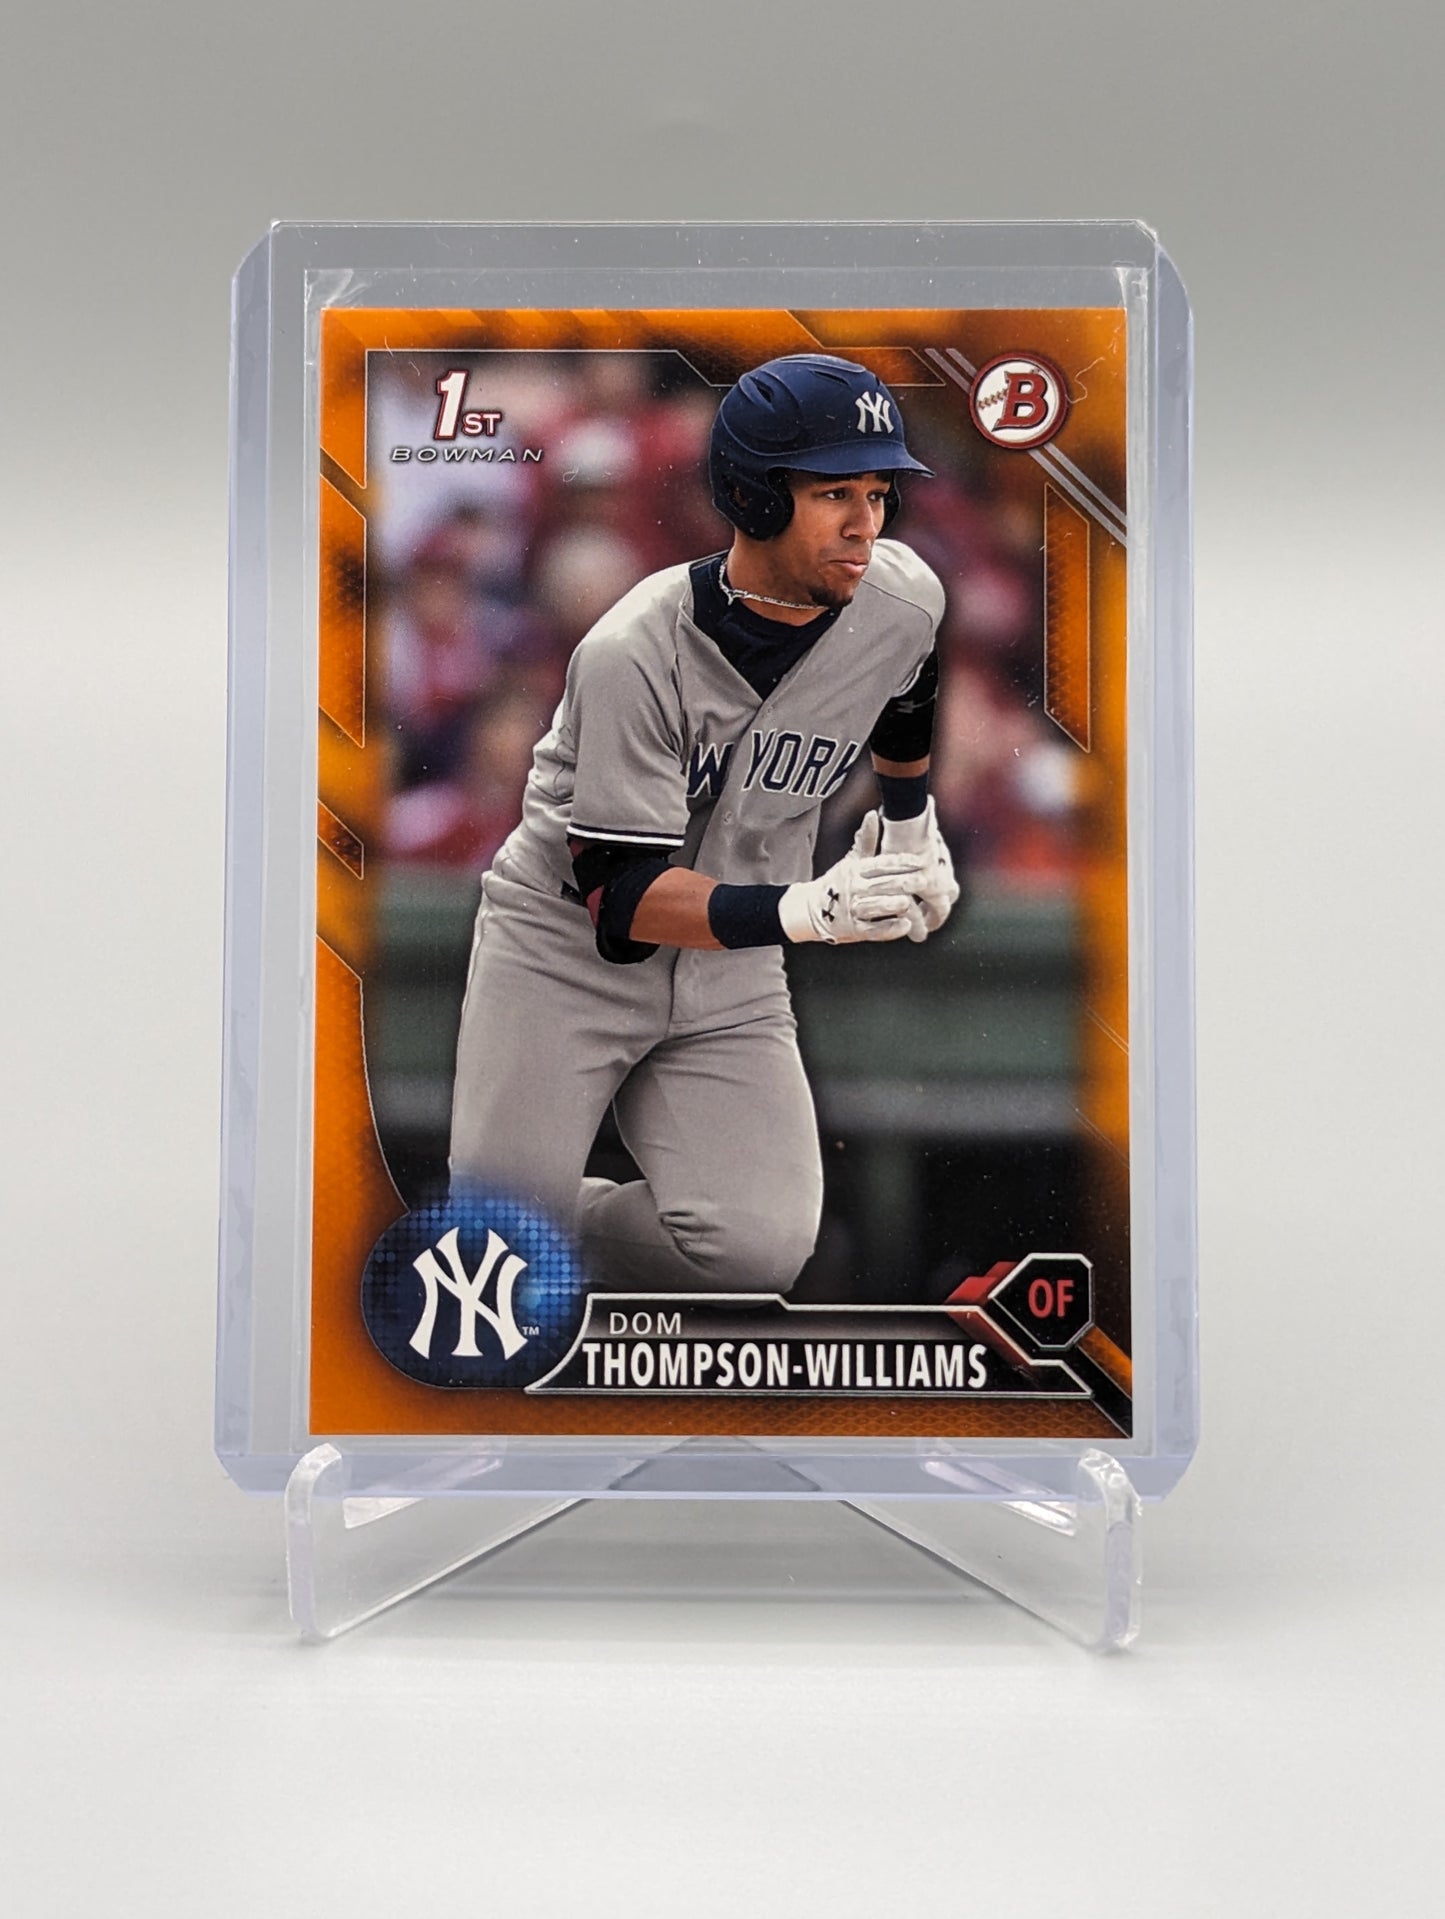 2016 Bowman Orange #BD-23 Dom Thompson-Williams #/25 Yankees